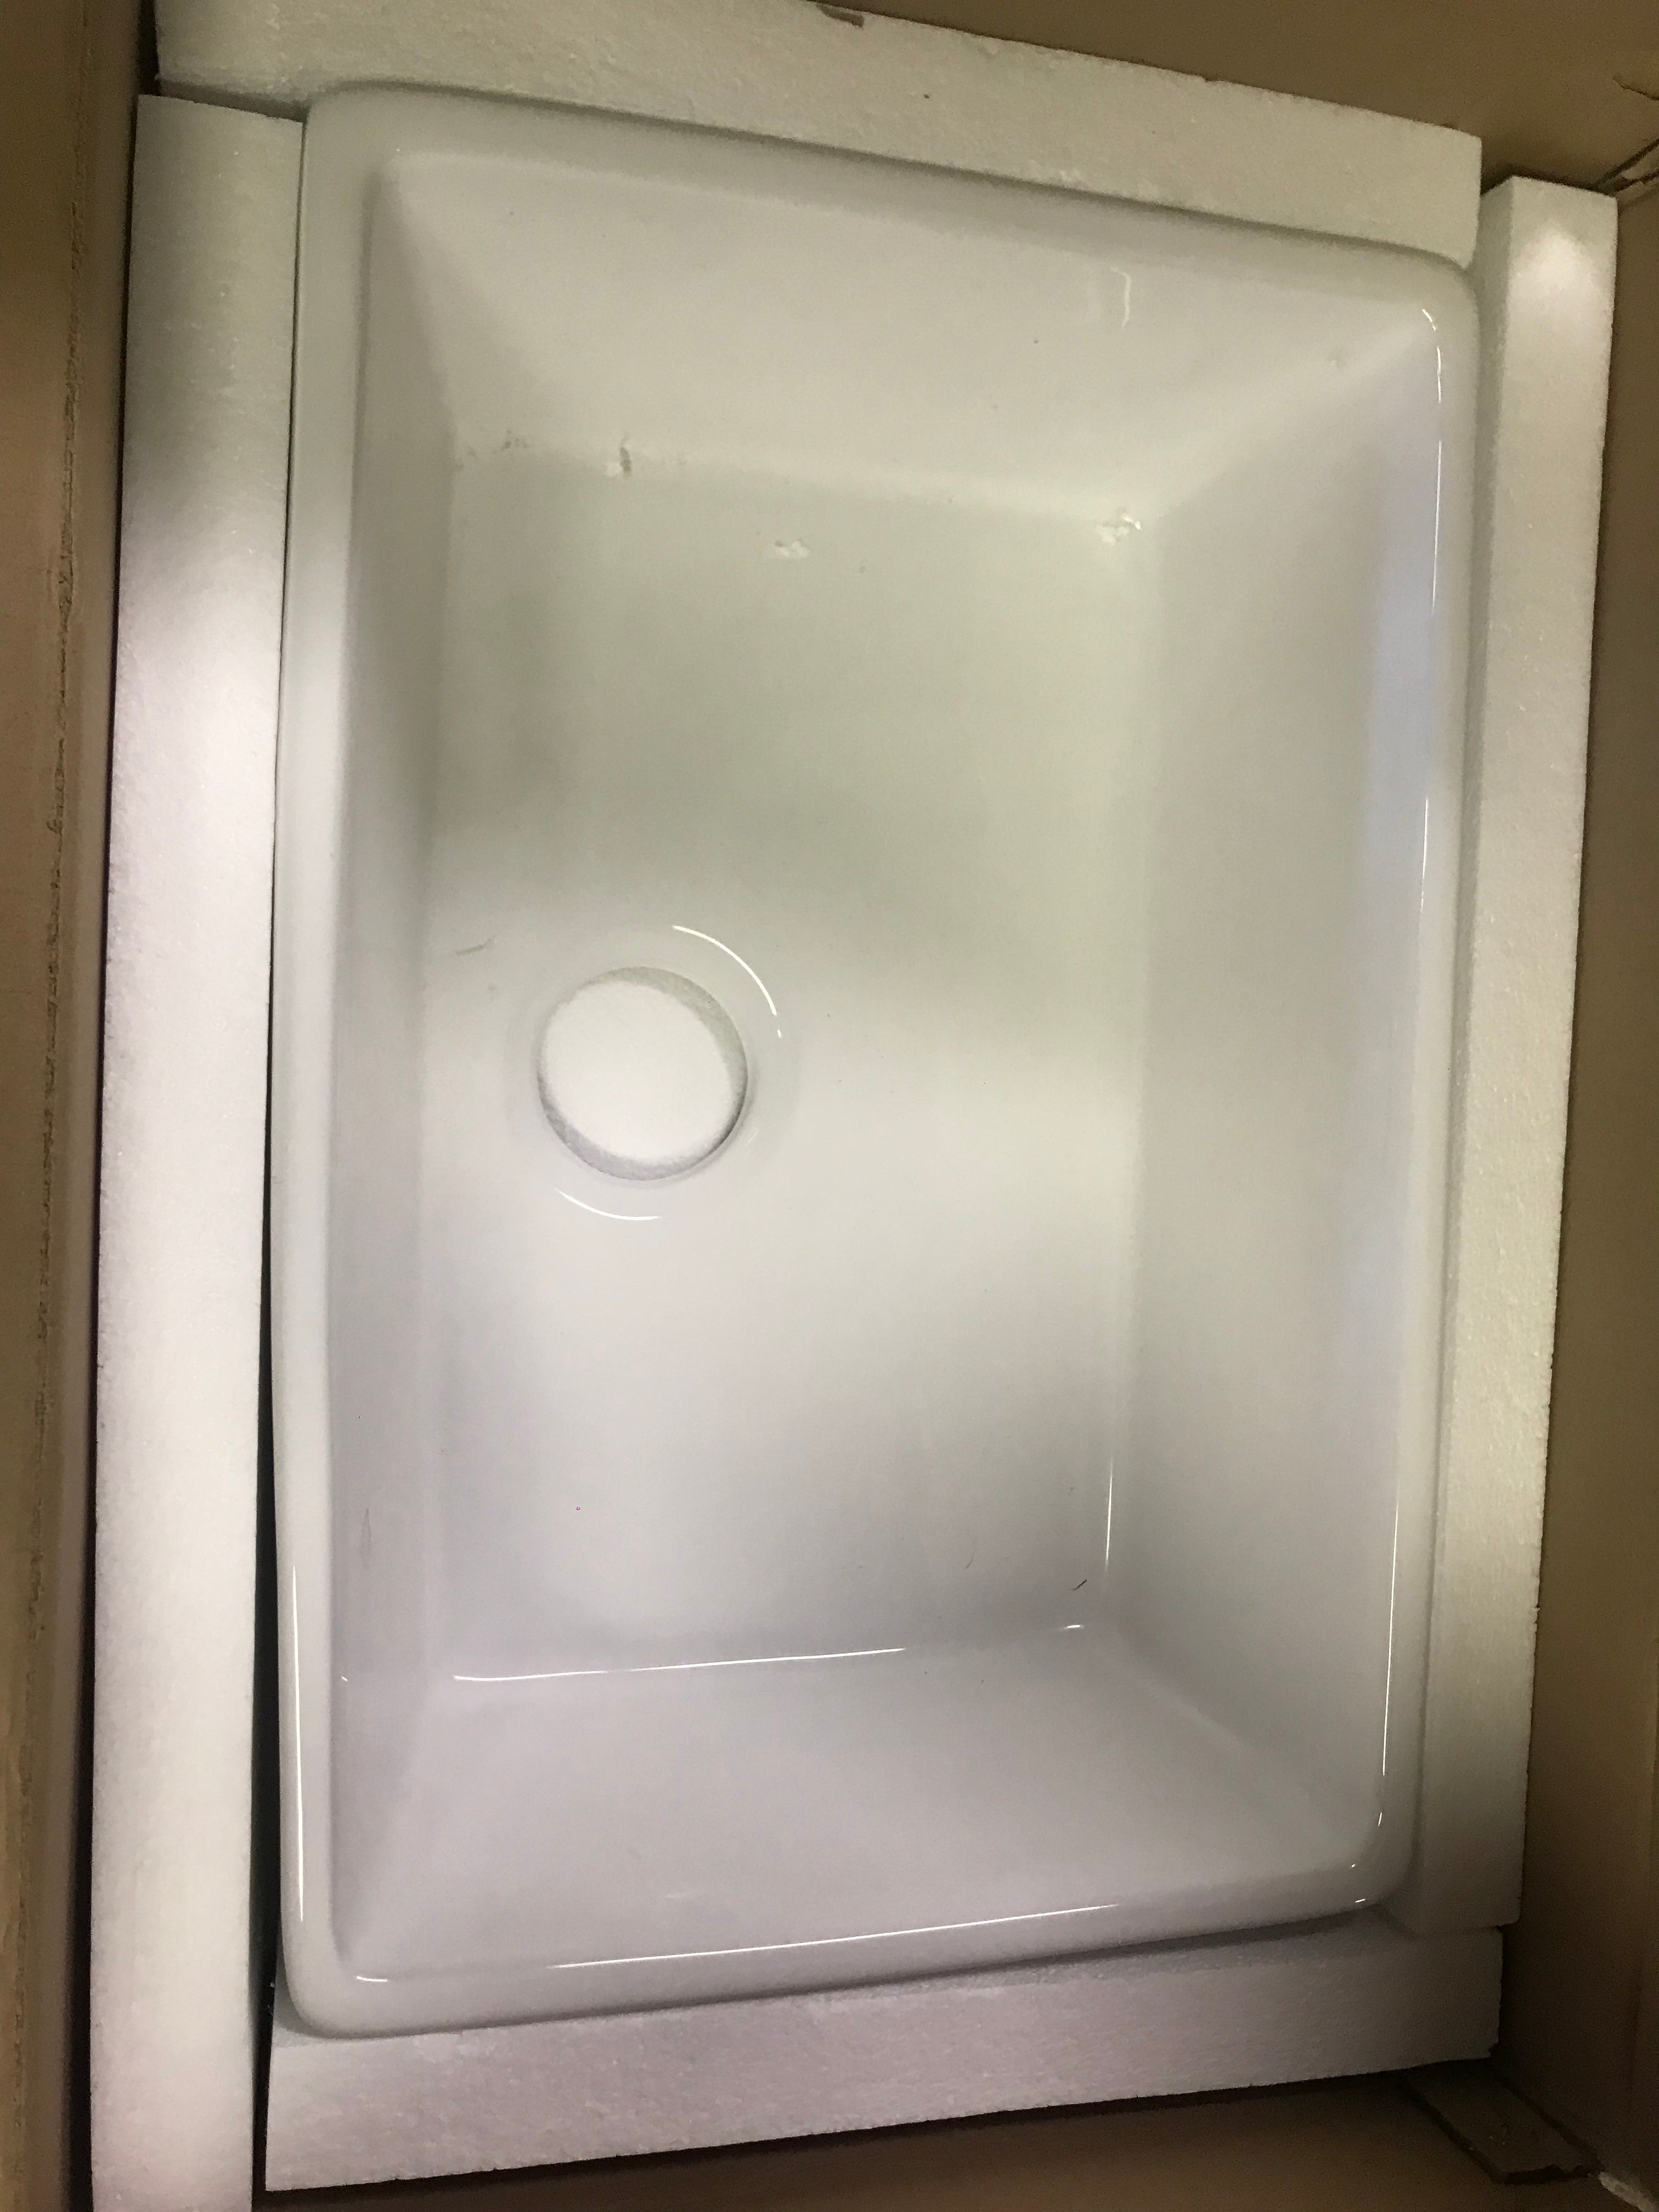 Bathroom sink White Ceramic Drop-In or Undermount Rectangular Modern Bathroom Sink Drain Included (23.75-in x 16-in)